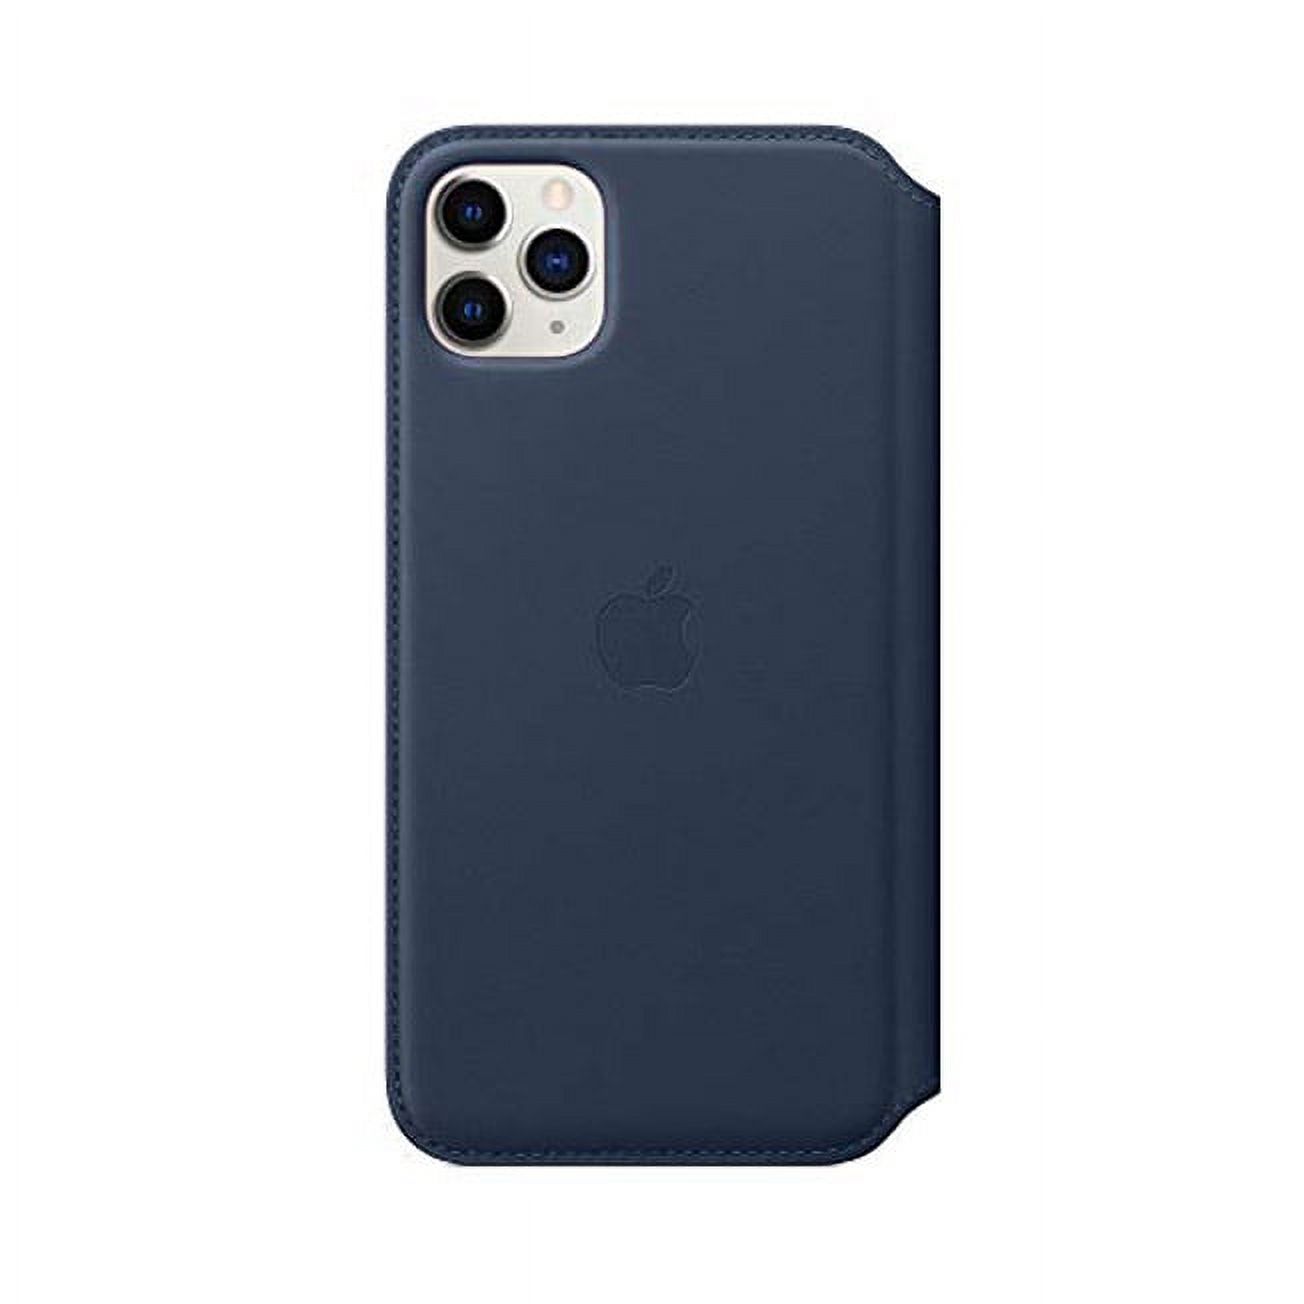 Apple Carrying Case (Folio) Apple iPhone 11 Pro Max Smartphone, Deep Sea Blue - image 2 of 4